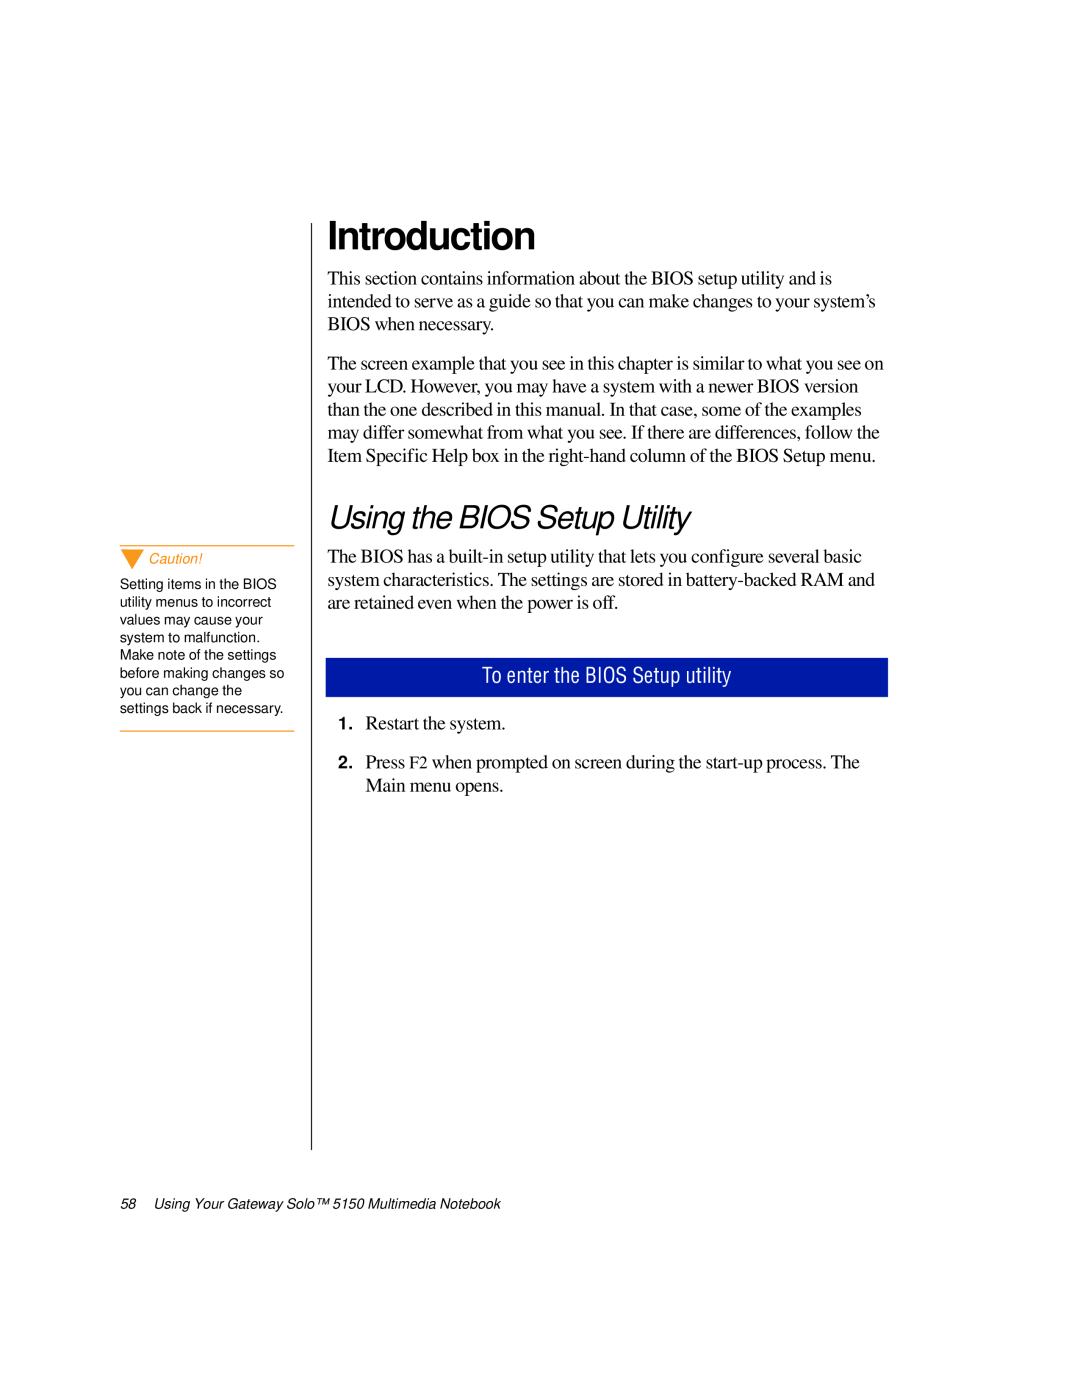 Gateway TM 5150 manual Introduction, Using the BIOS Setup Utility, To enter the BIOS Setup utility 